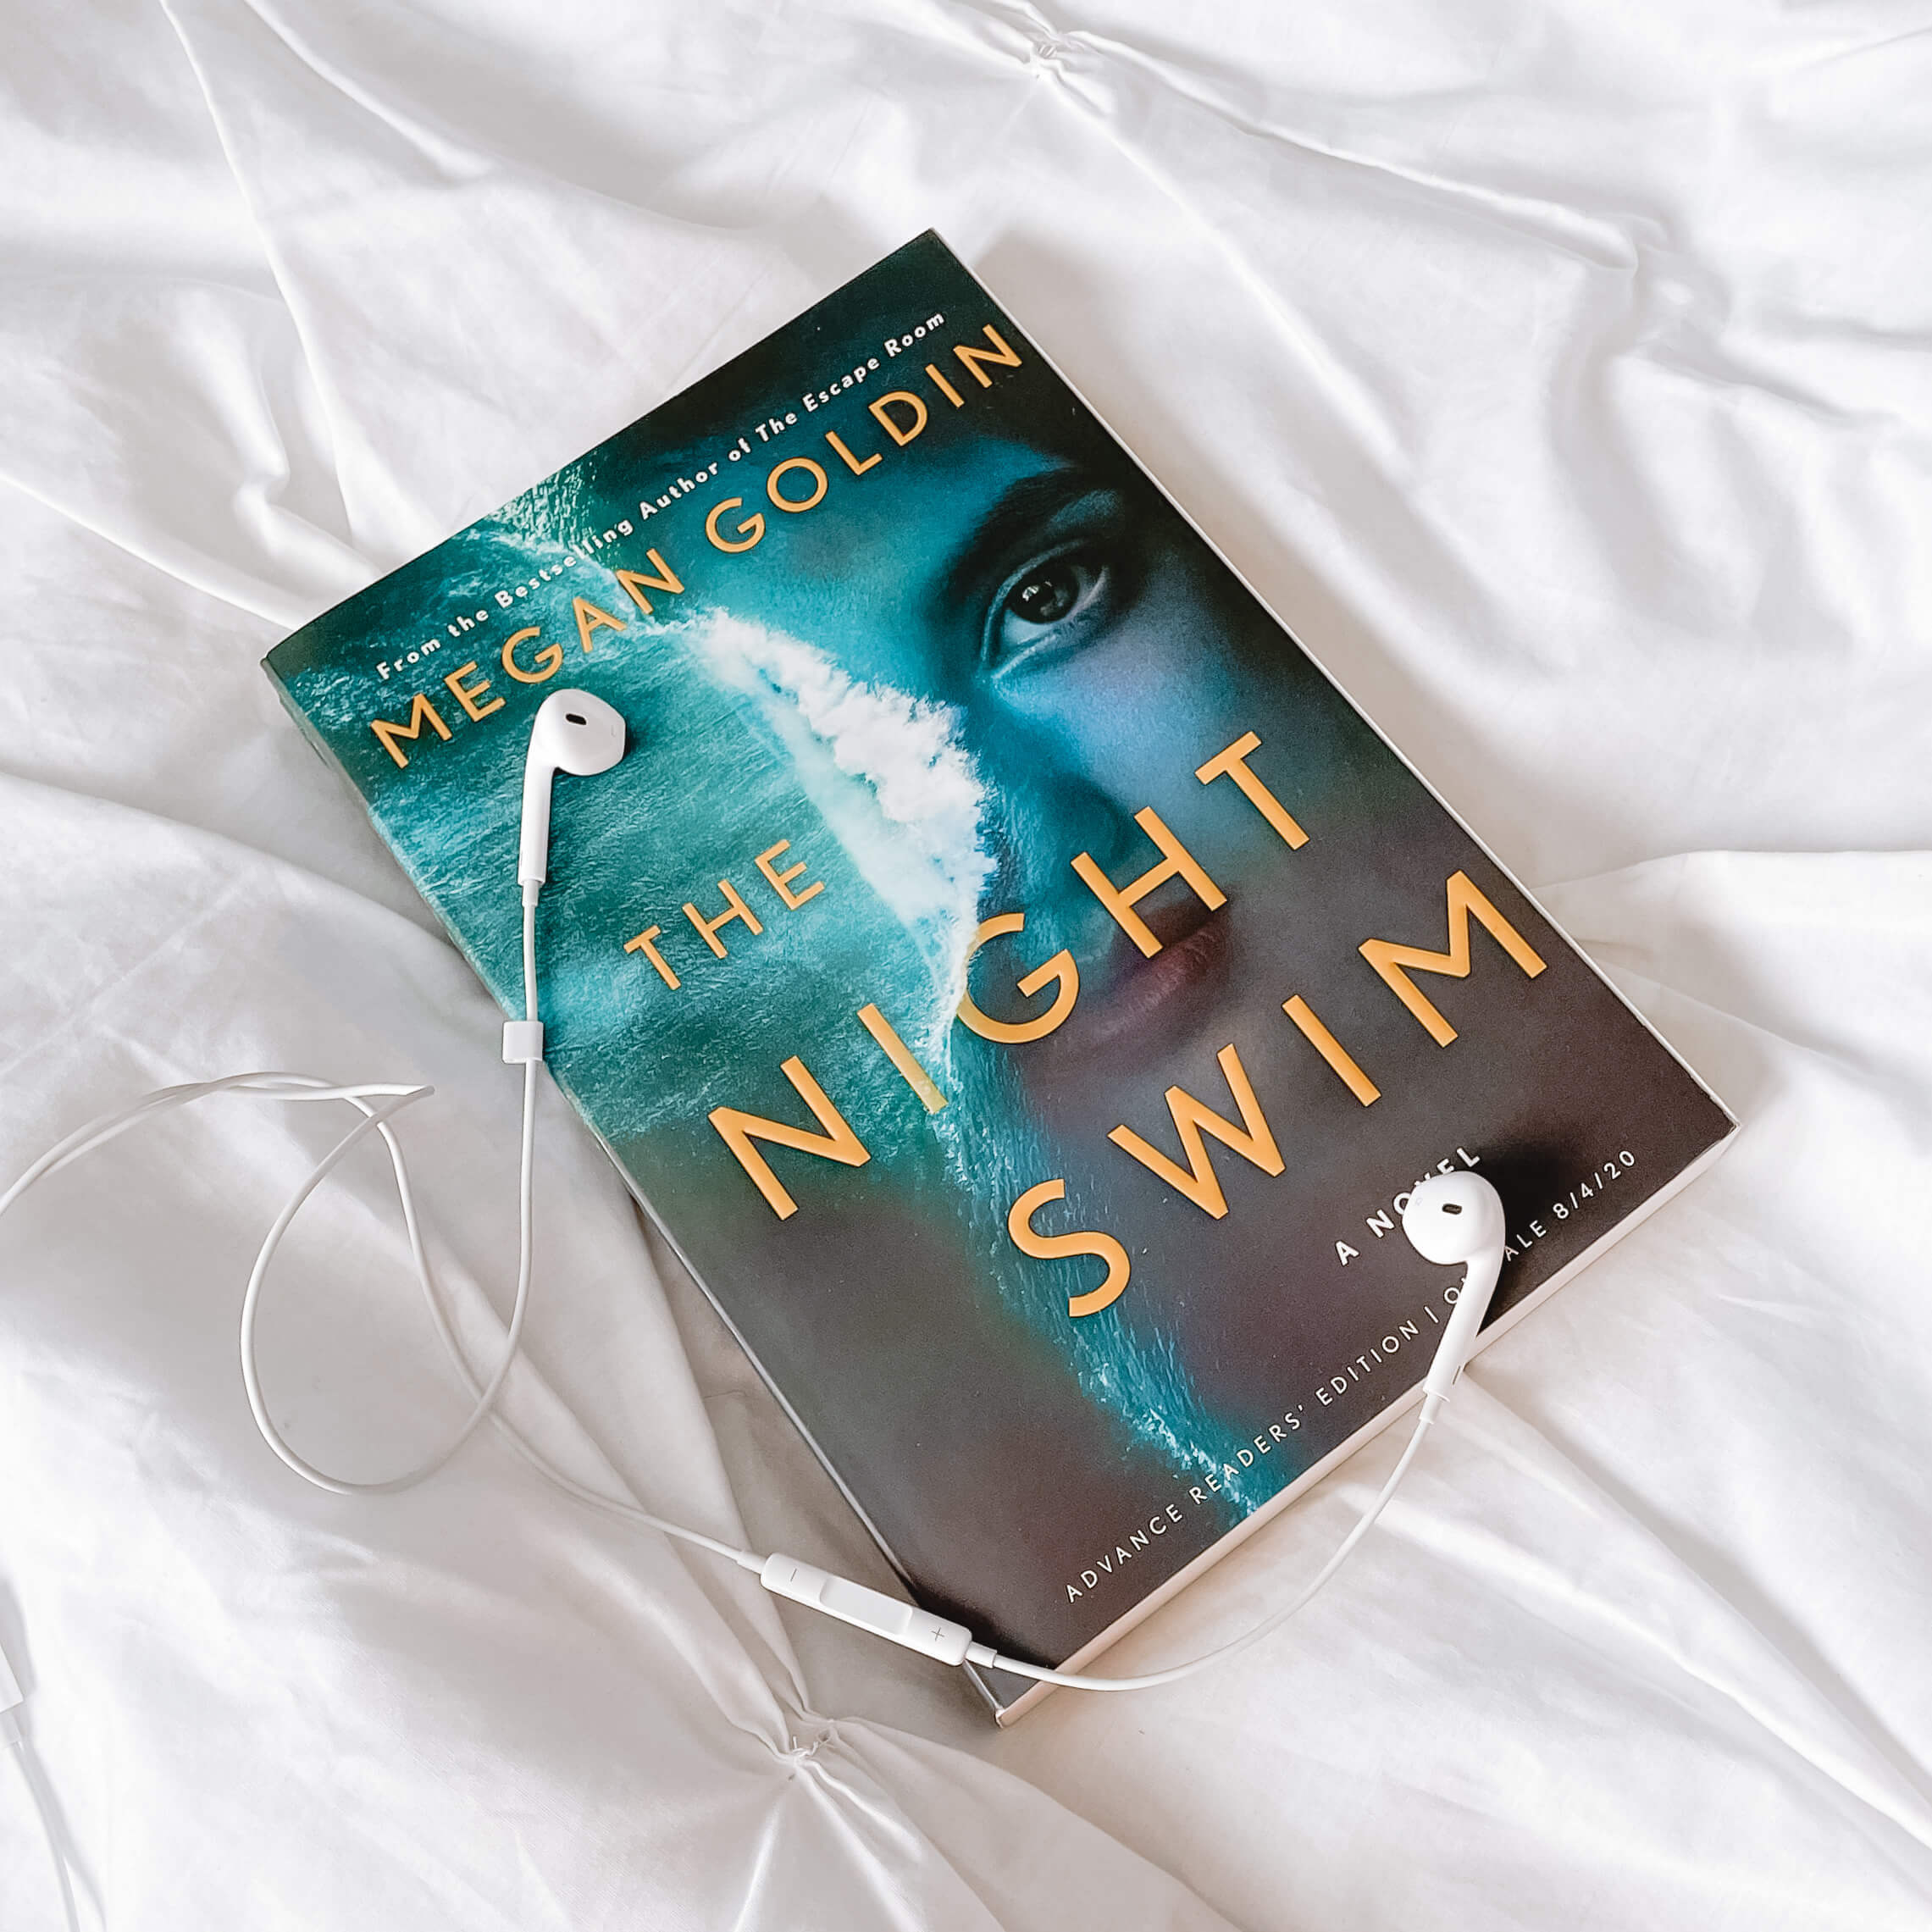 Stylized photo of The Night Swim by Megan Goldin